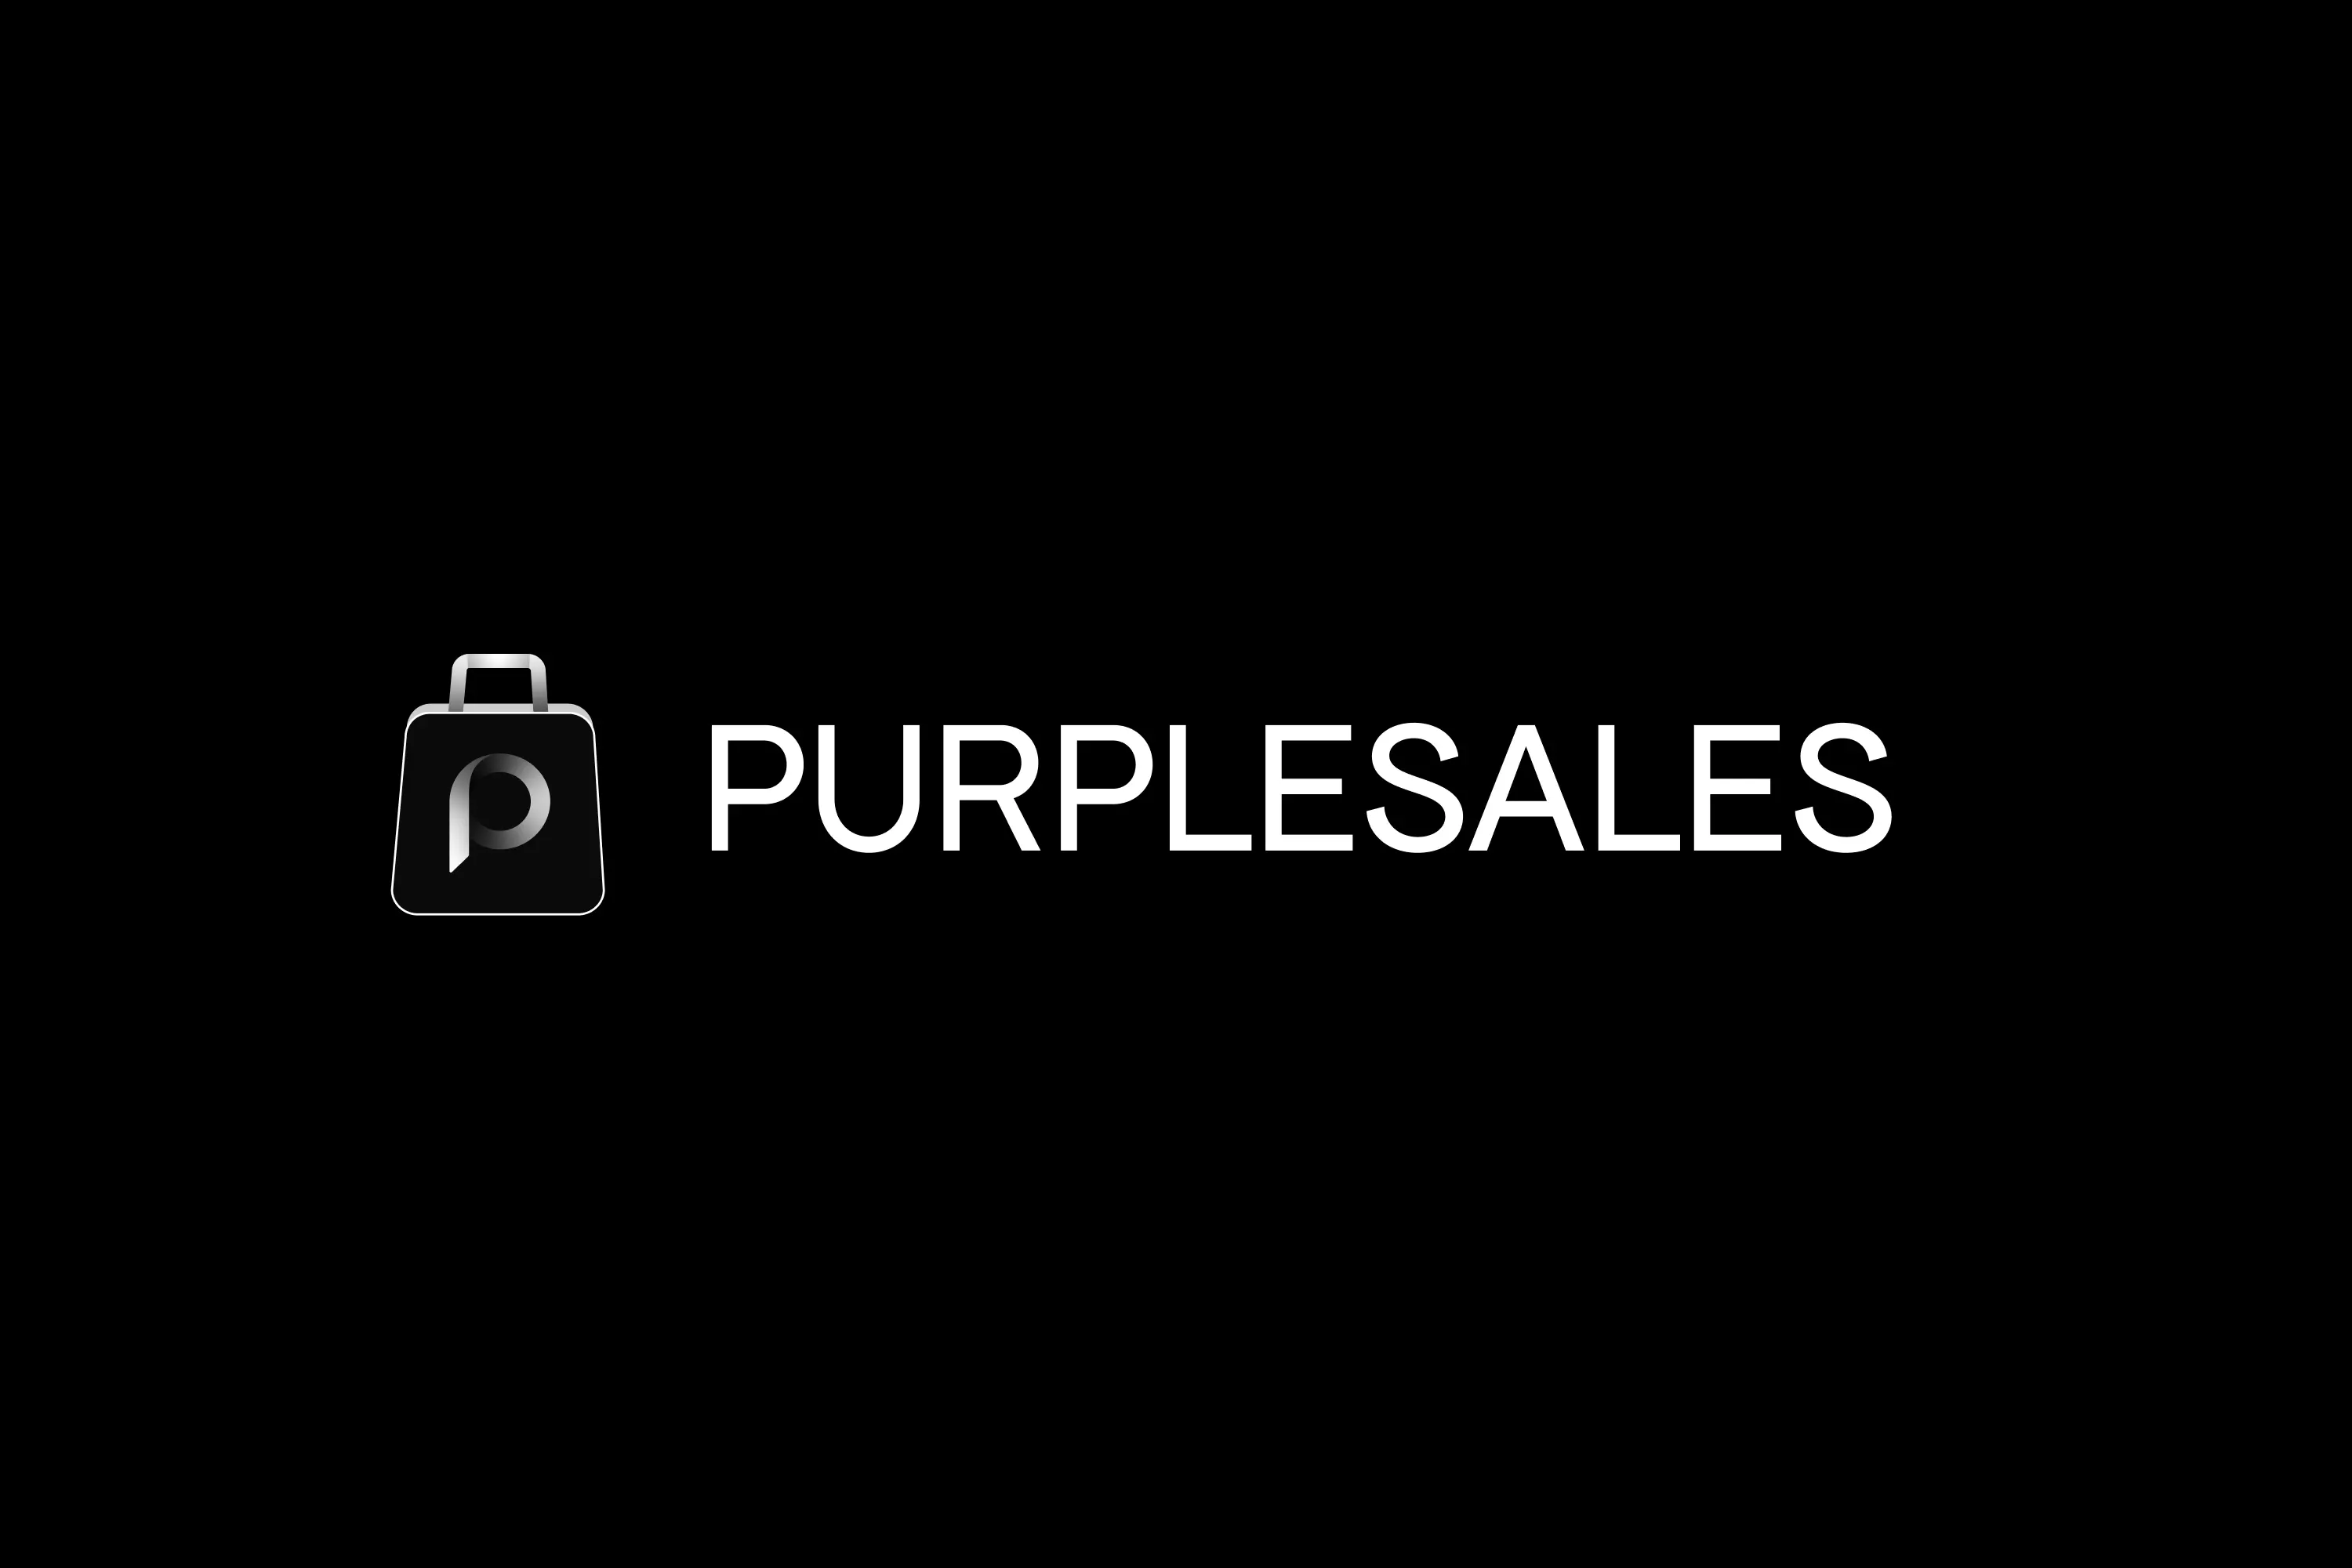 Purplesales